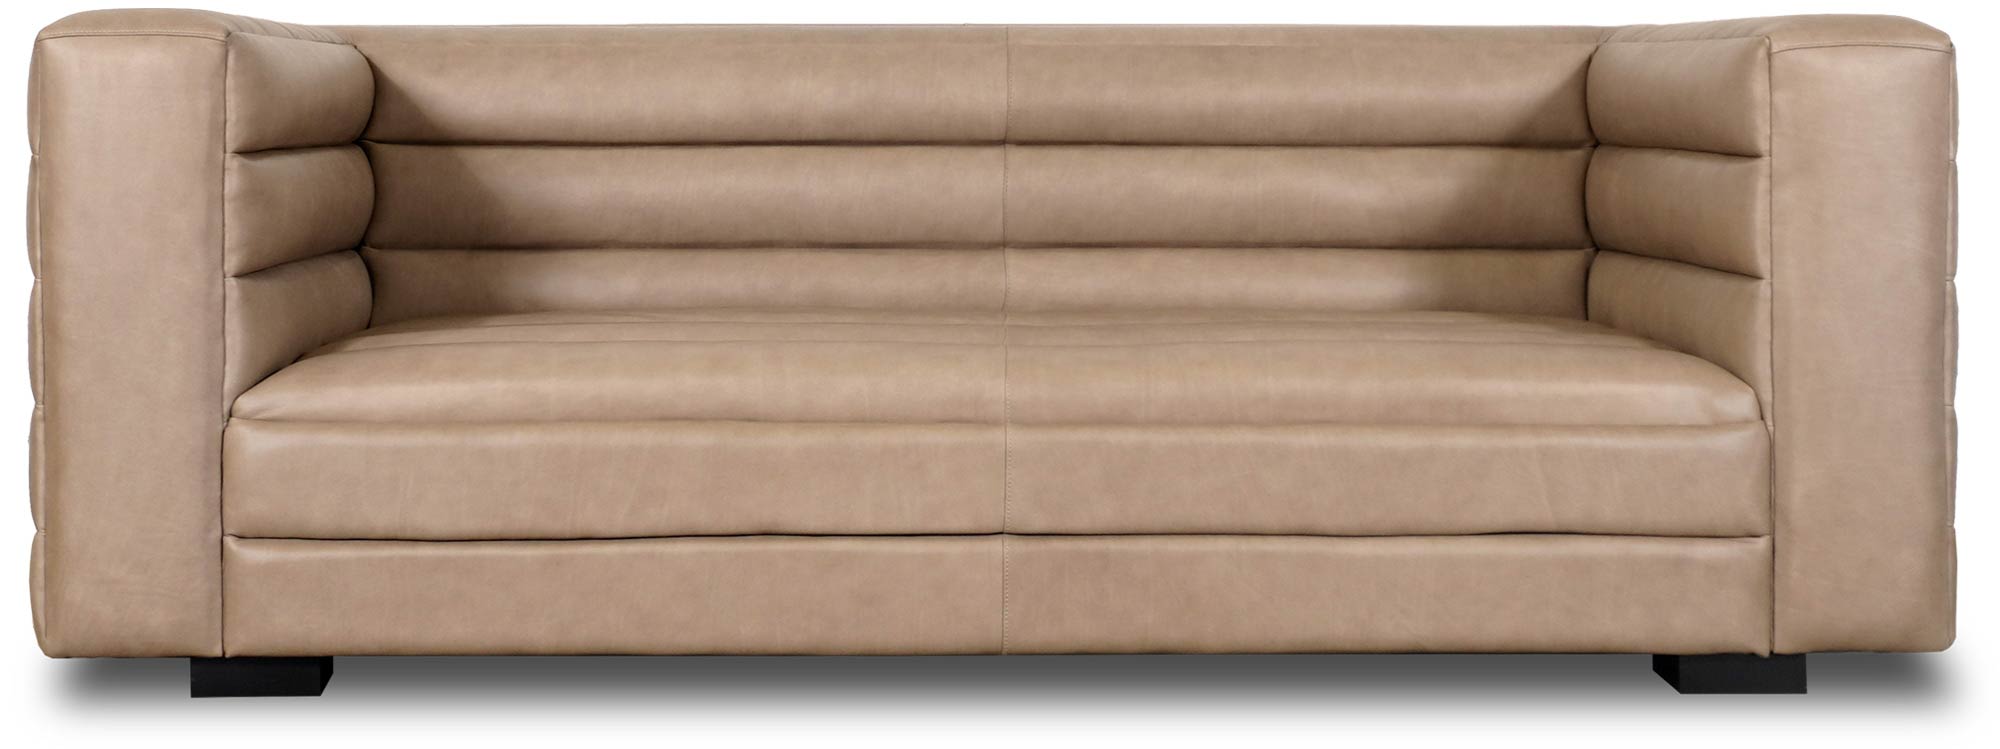 86 Clark sofa in No Regrets Desert Dust performance leather